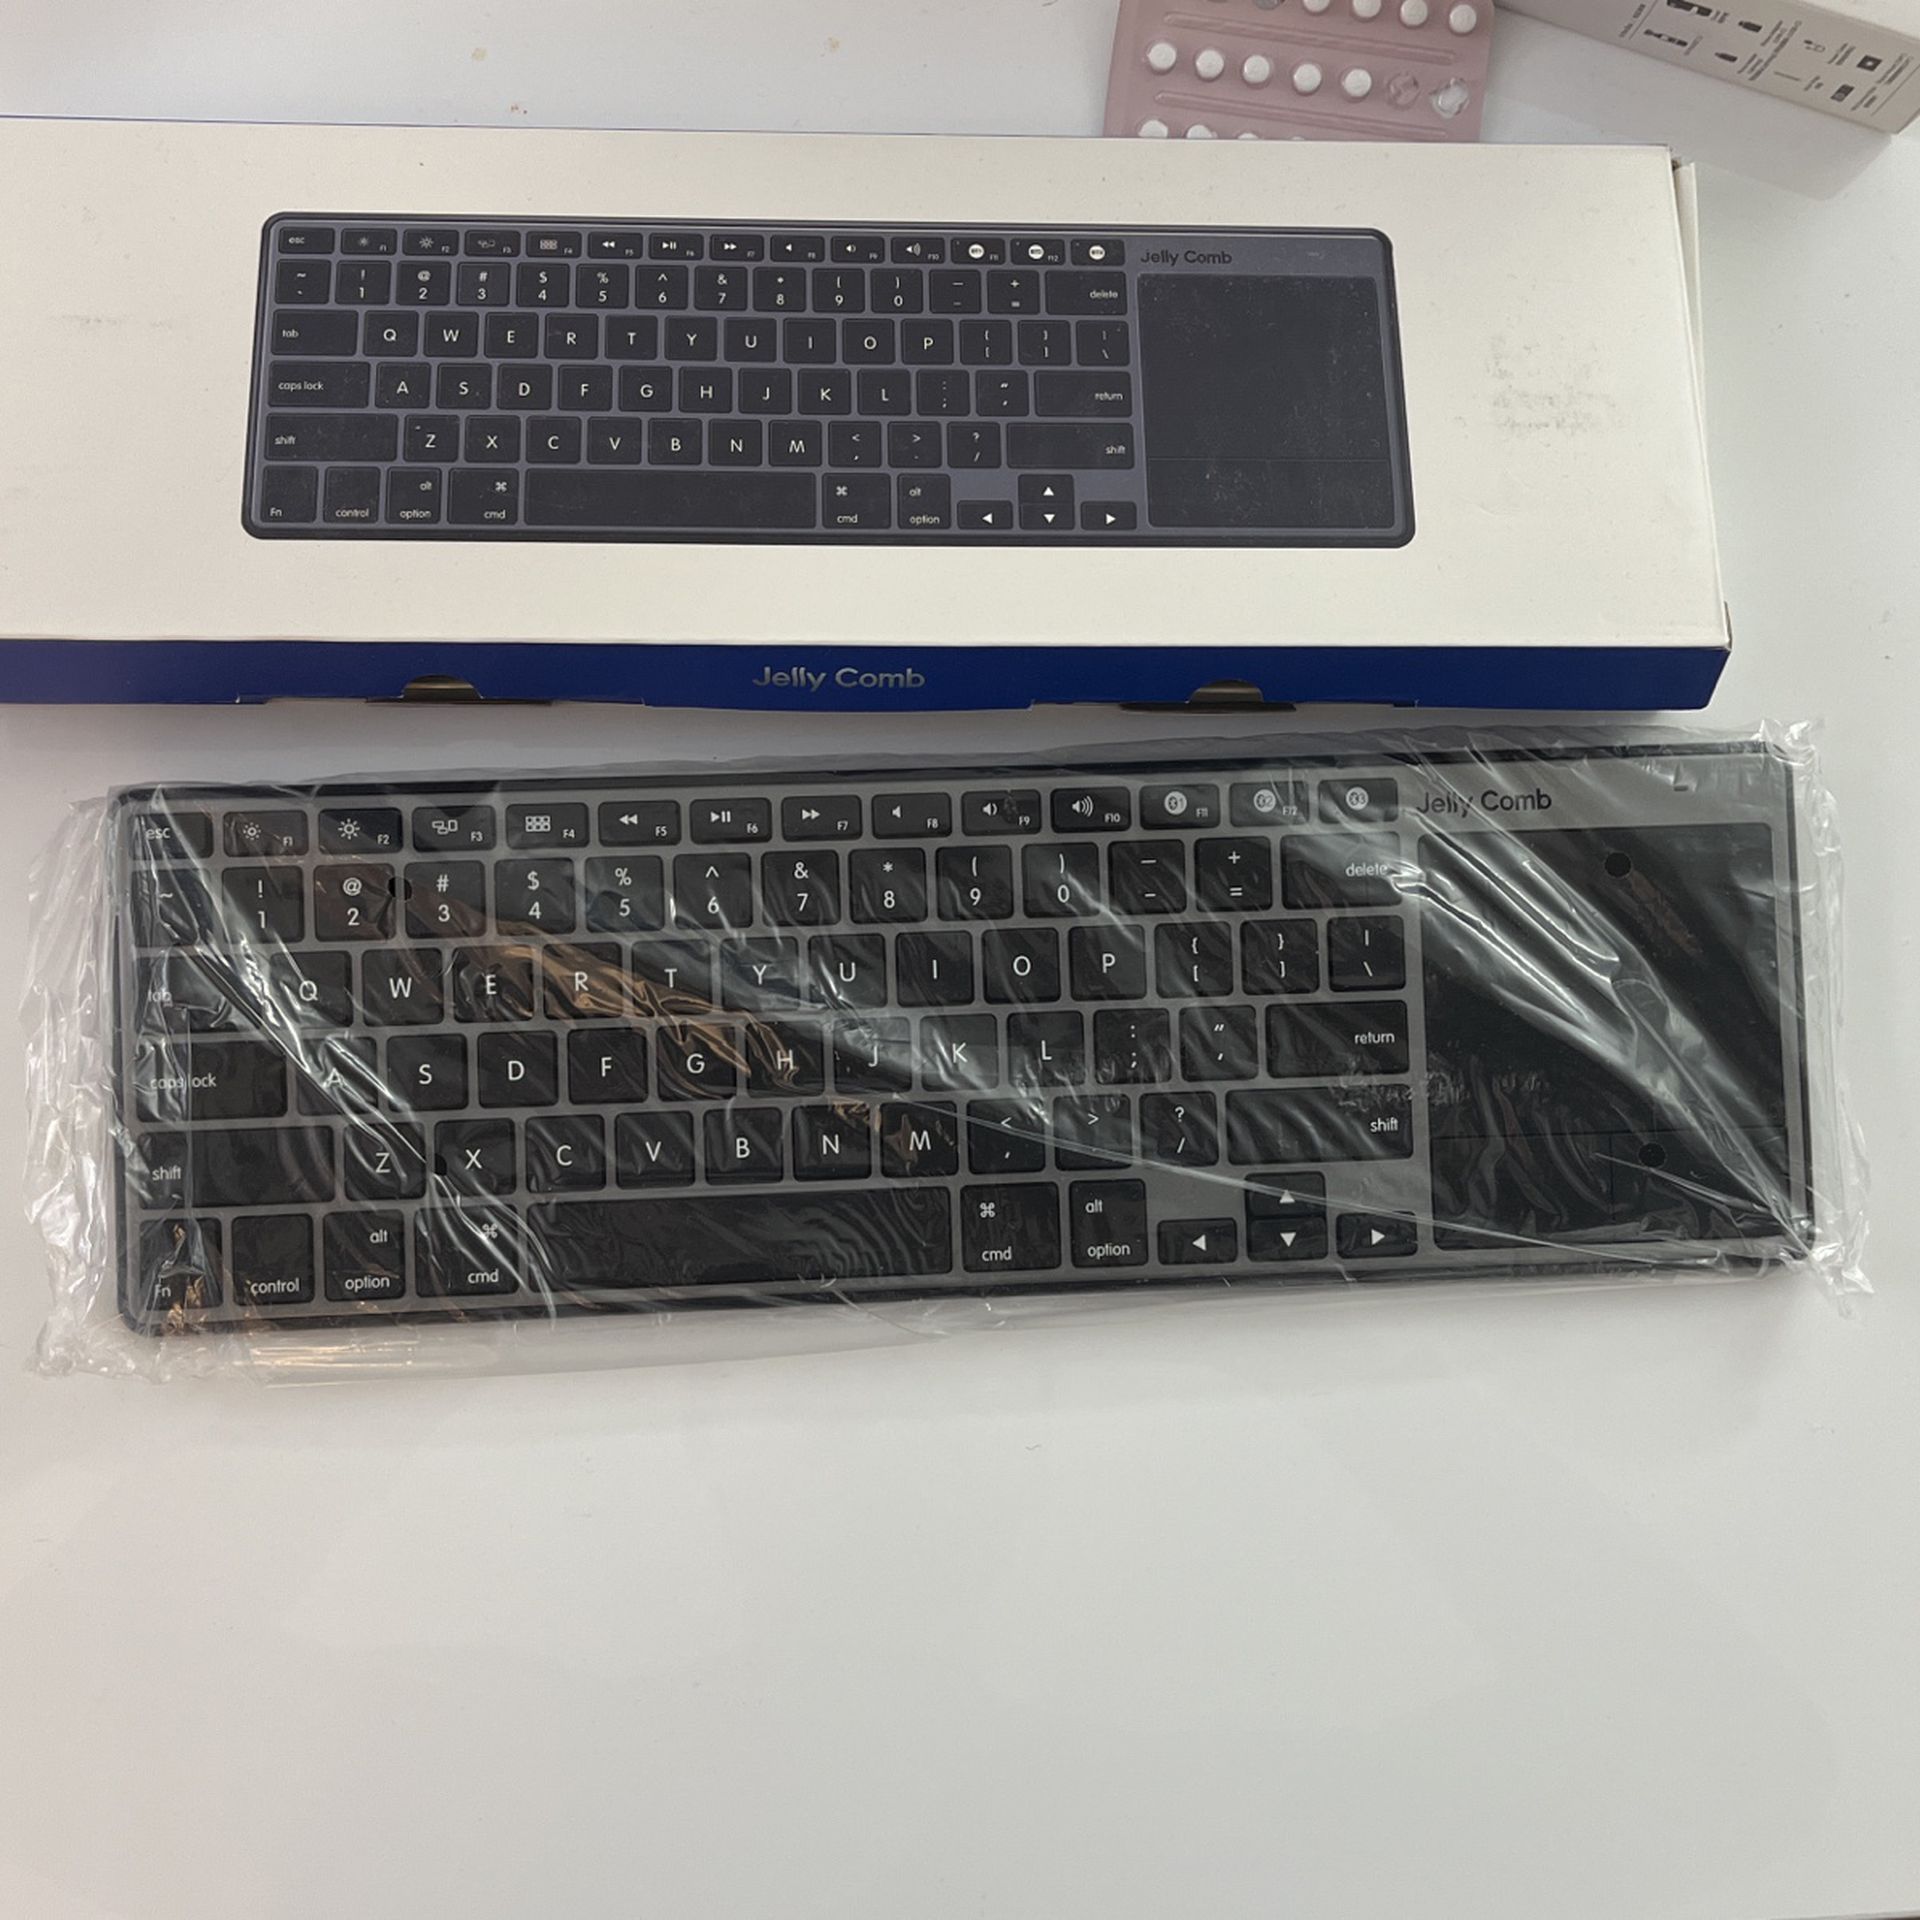 Keyboard Giveaway